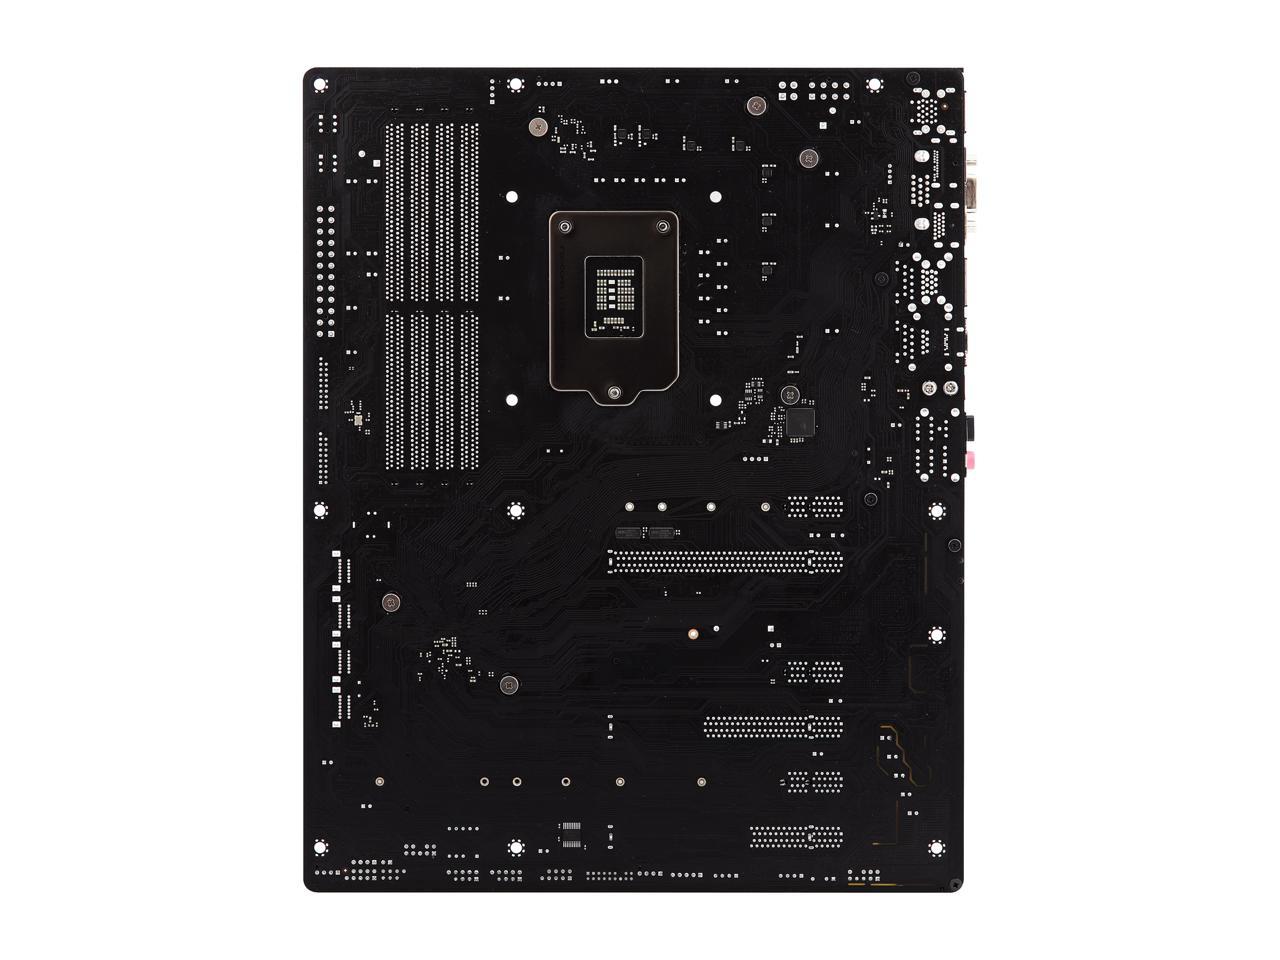 ASRock Z390 Phantom Gaming 6 LGA 1151 (300 Series) Intel Z390 SATA 6Gb/s ATX Intel Motherboard